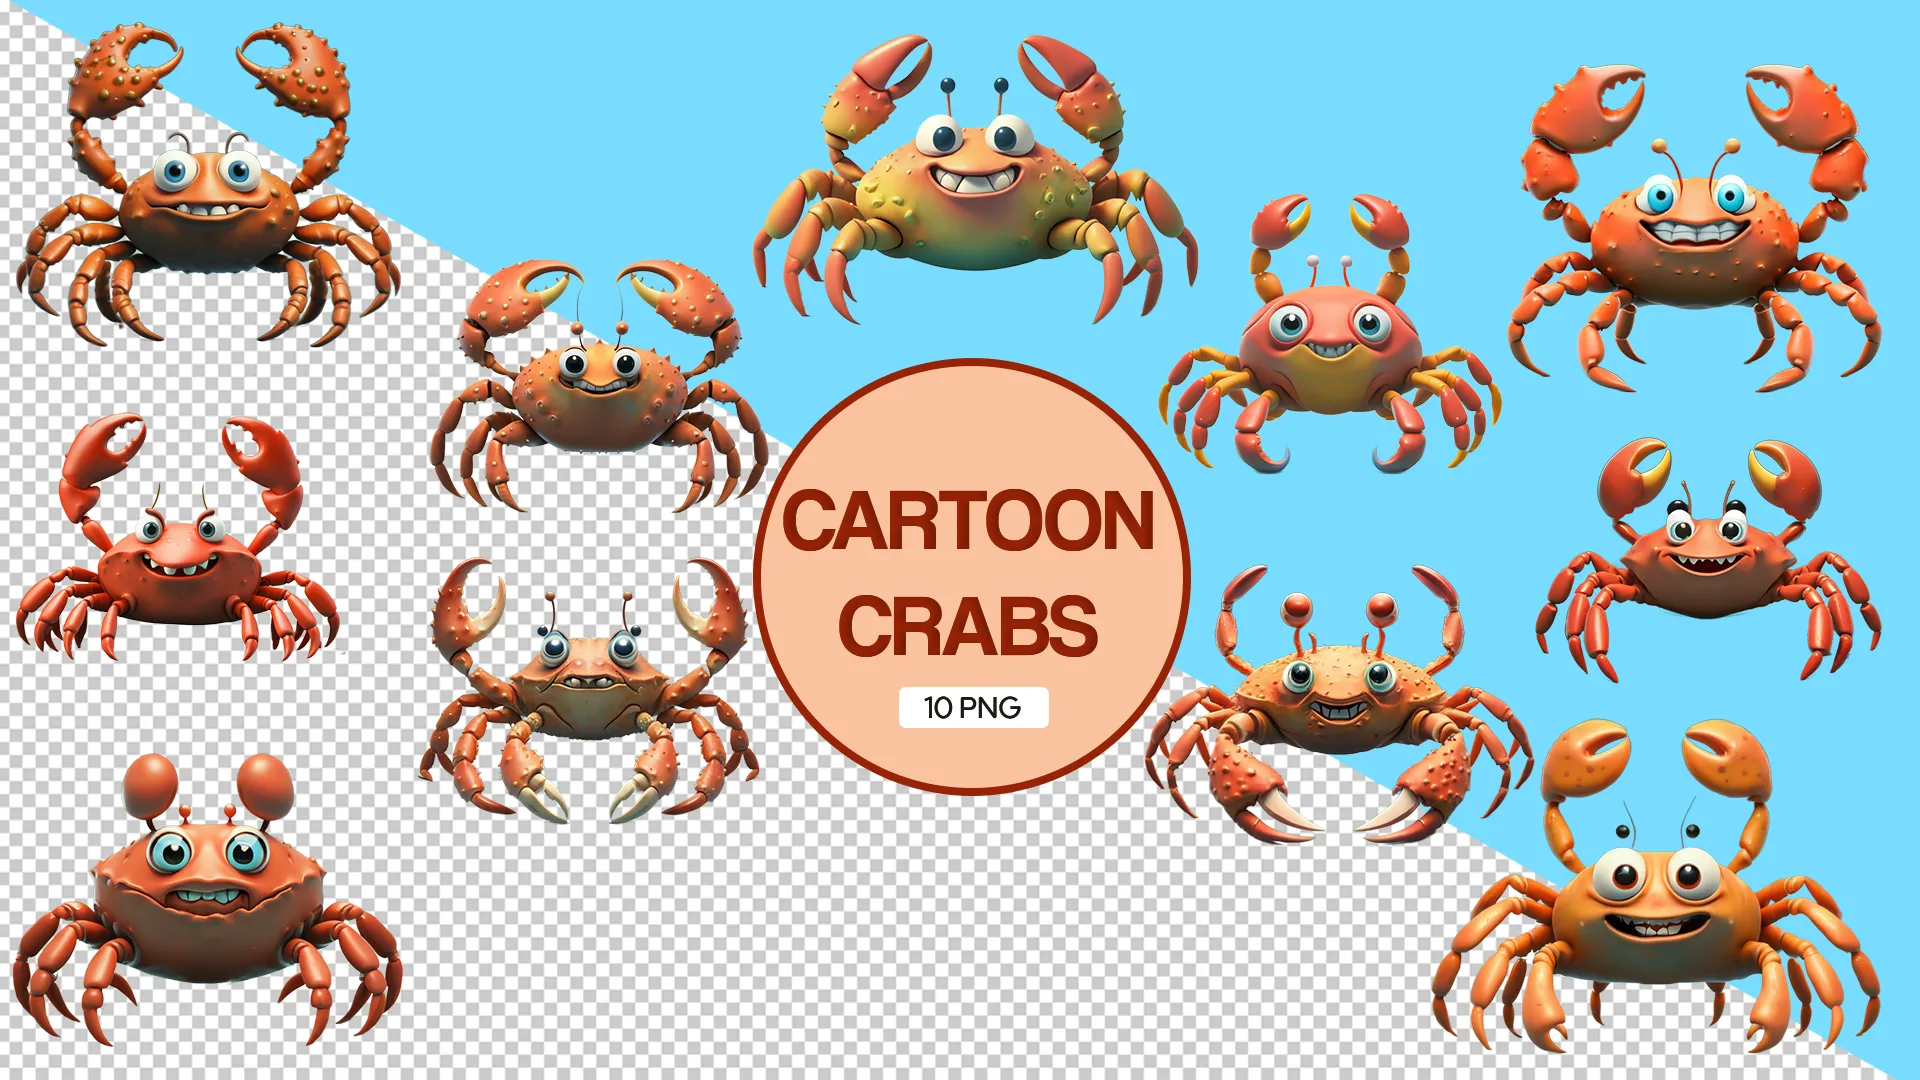 Cute 3D Cartoon Crabs Pack image